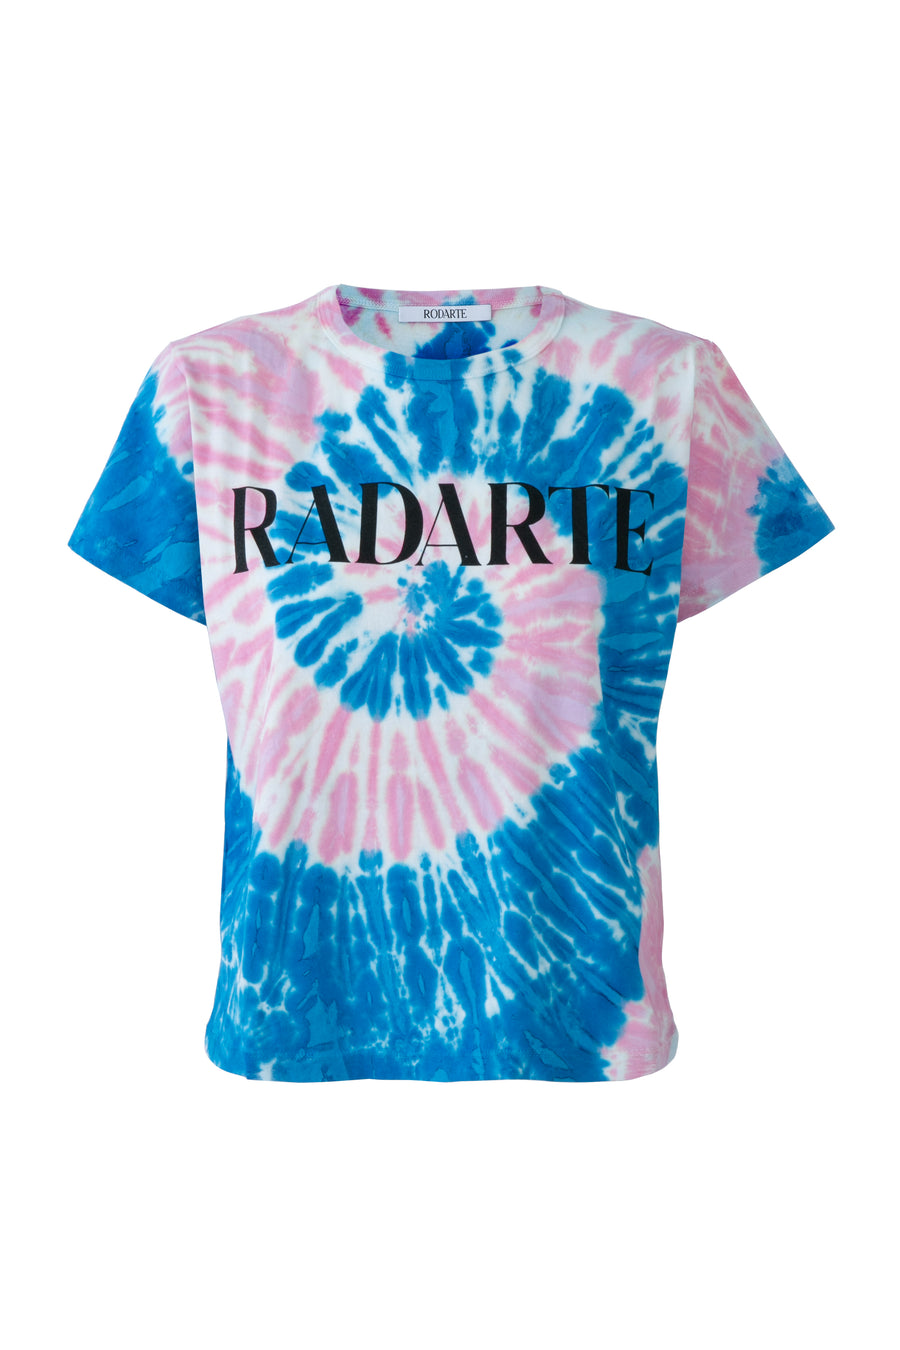 Tie Dye Radarte T-Shirt